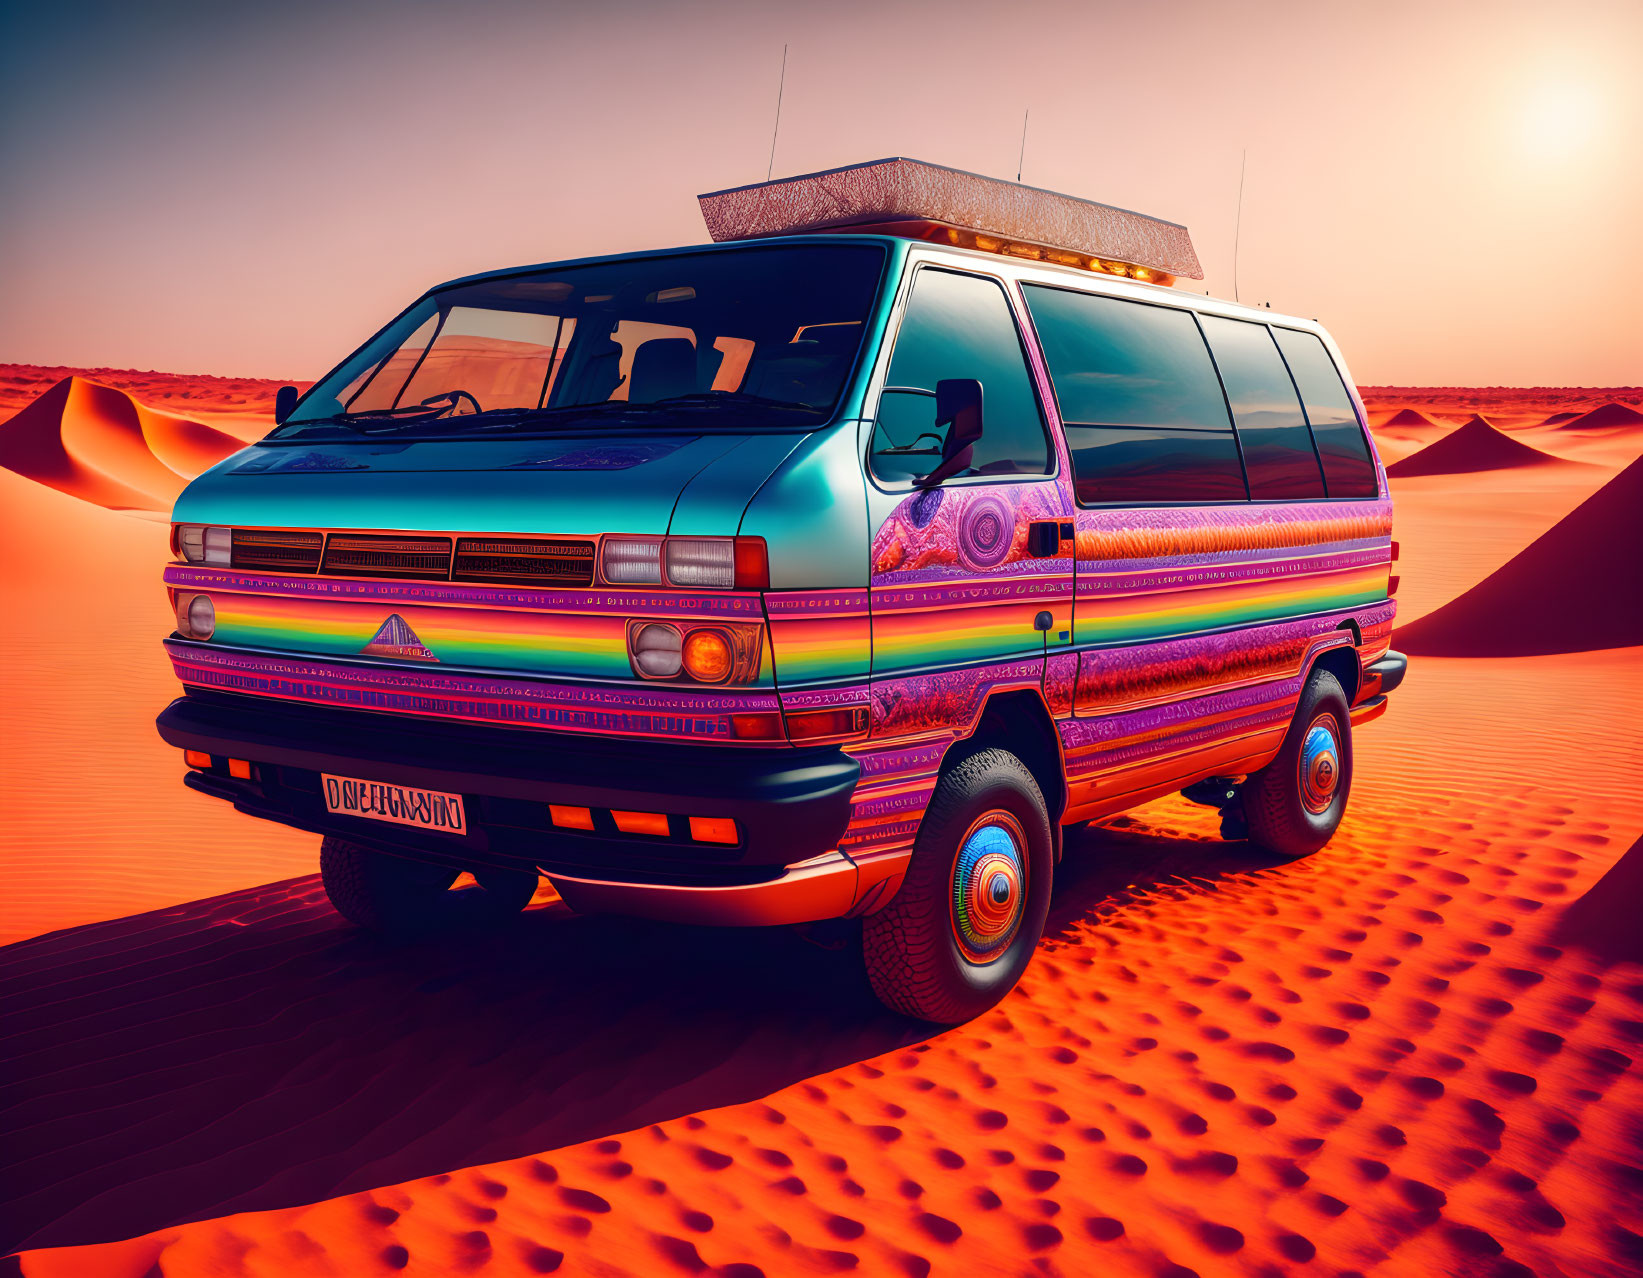 Colorful Psychedelic Design Van Parked on Desert Dune